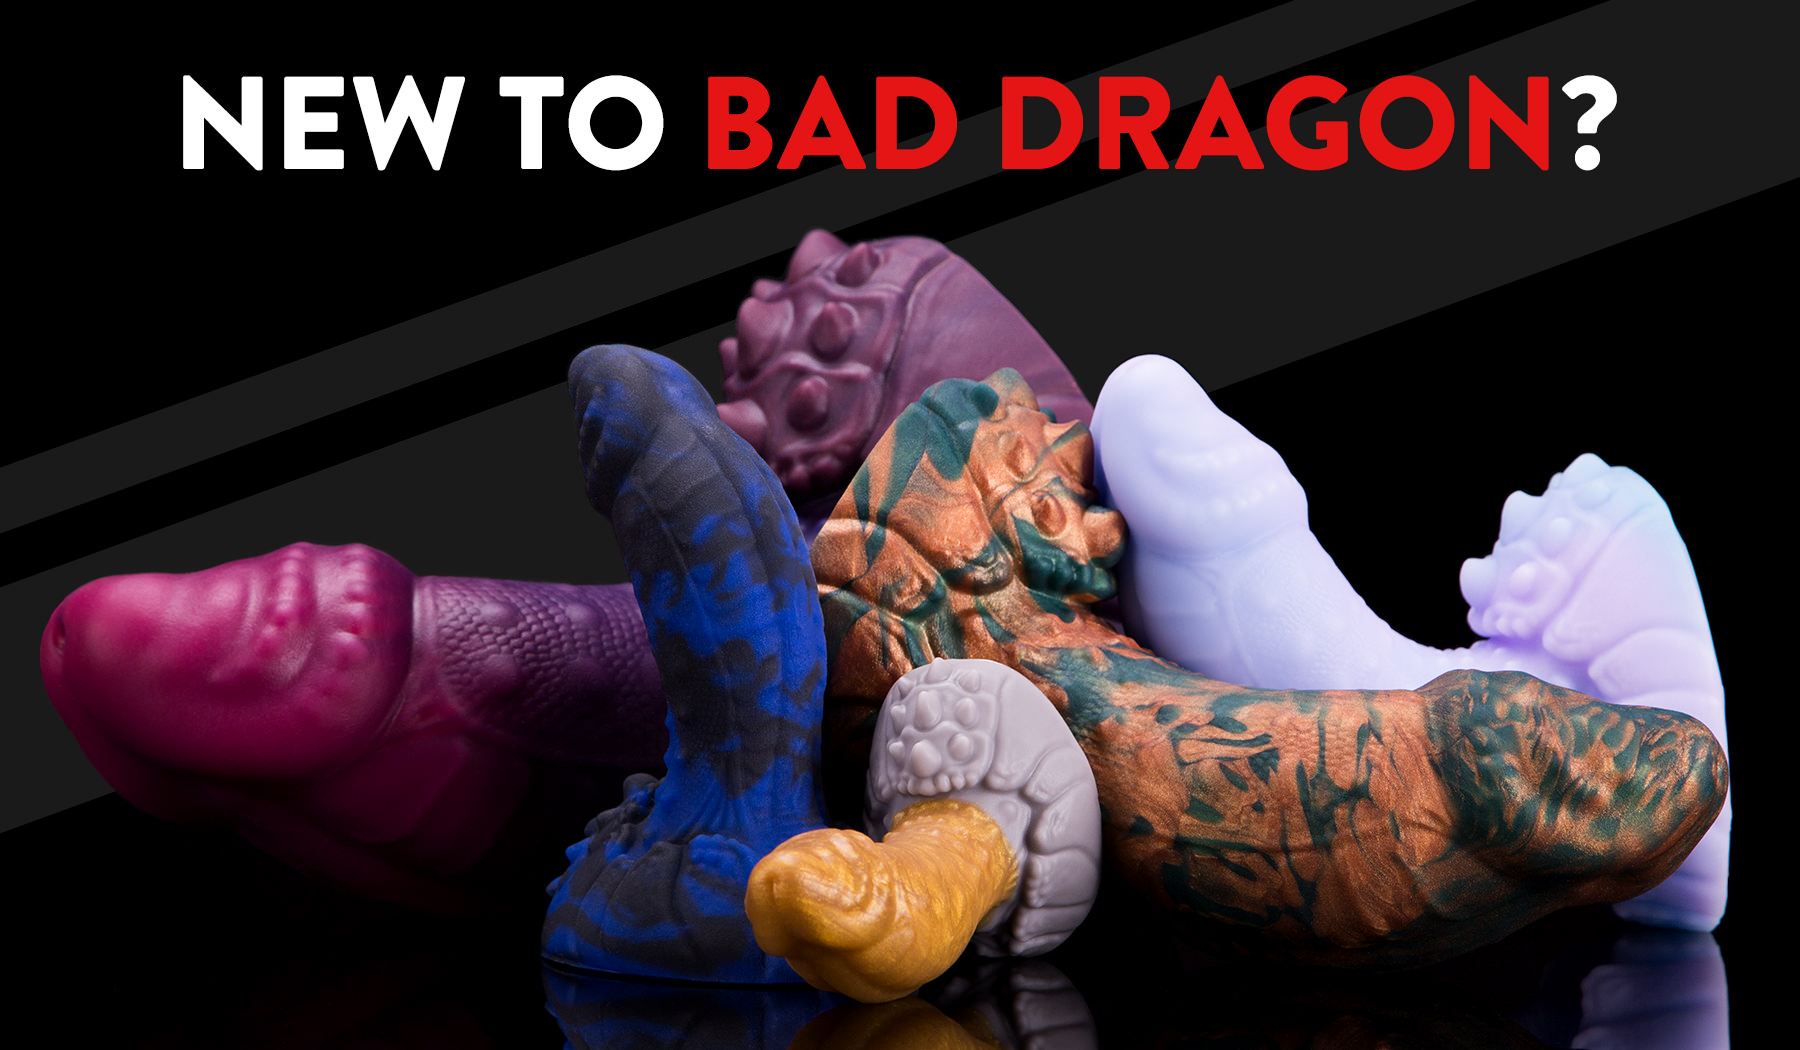 brandon keane share bad dragon squirting dildo photos